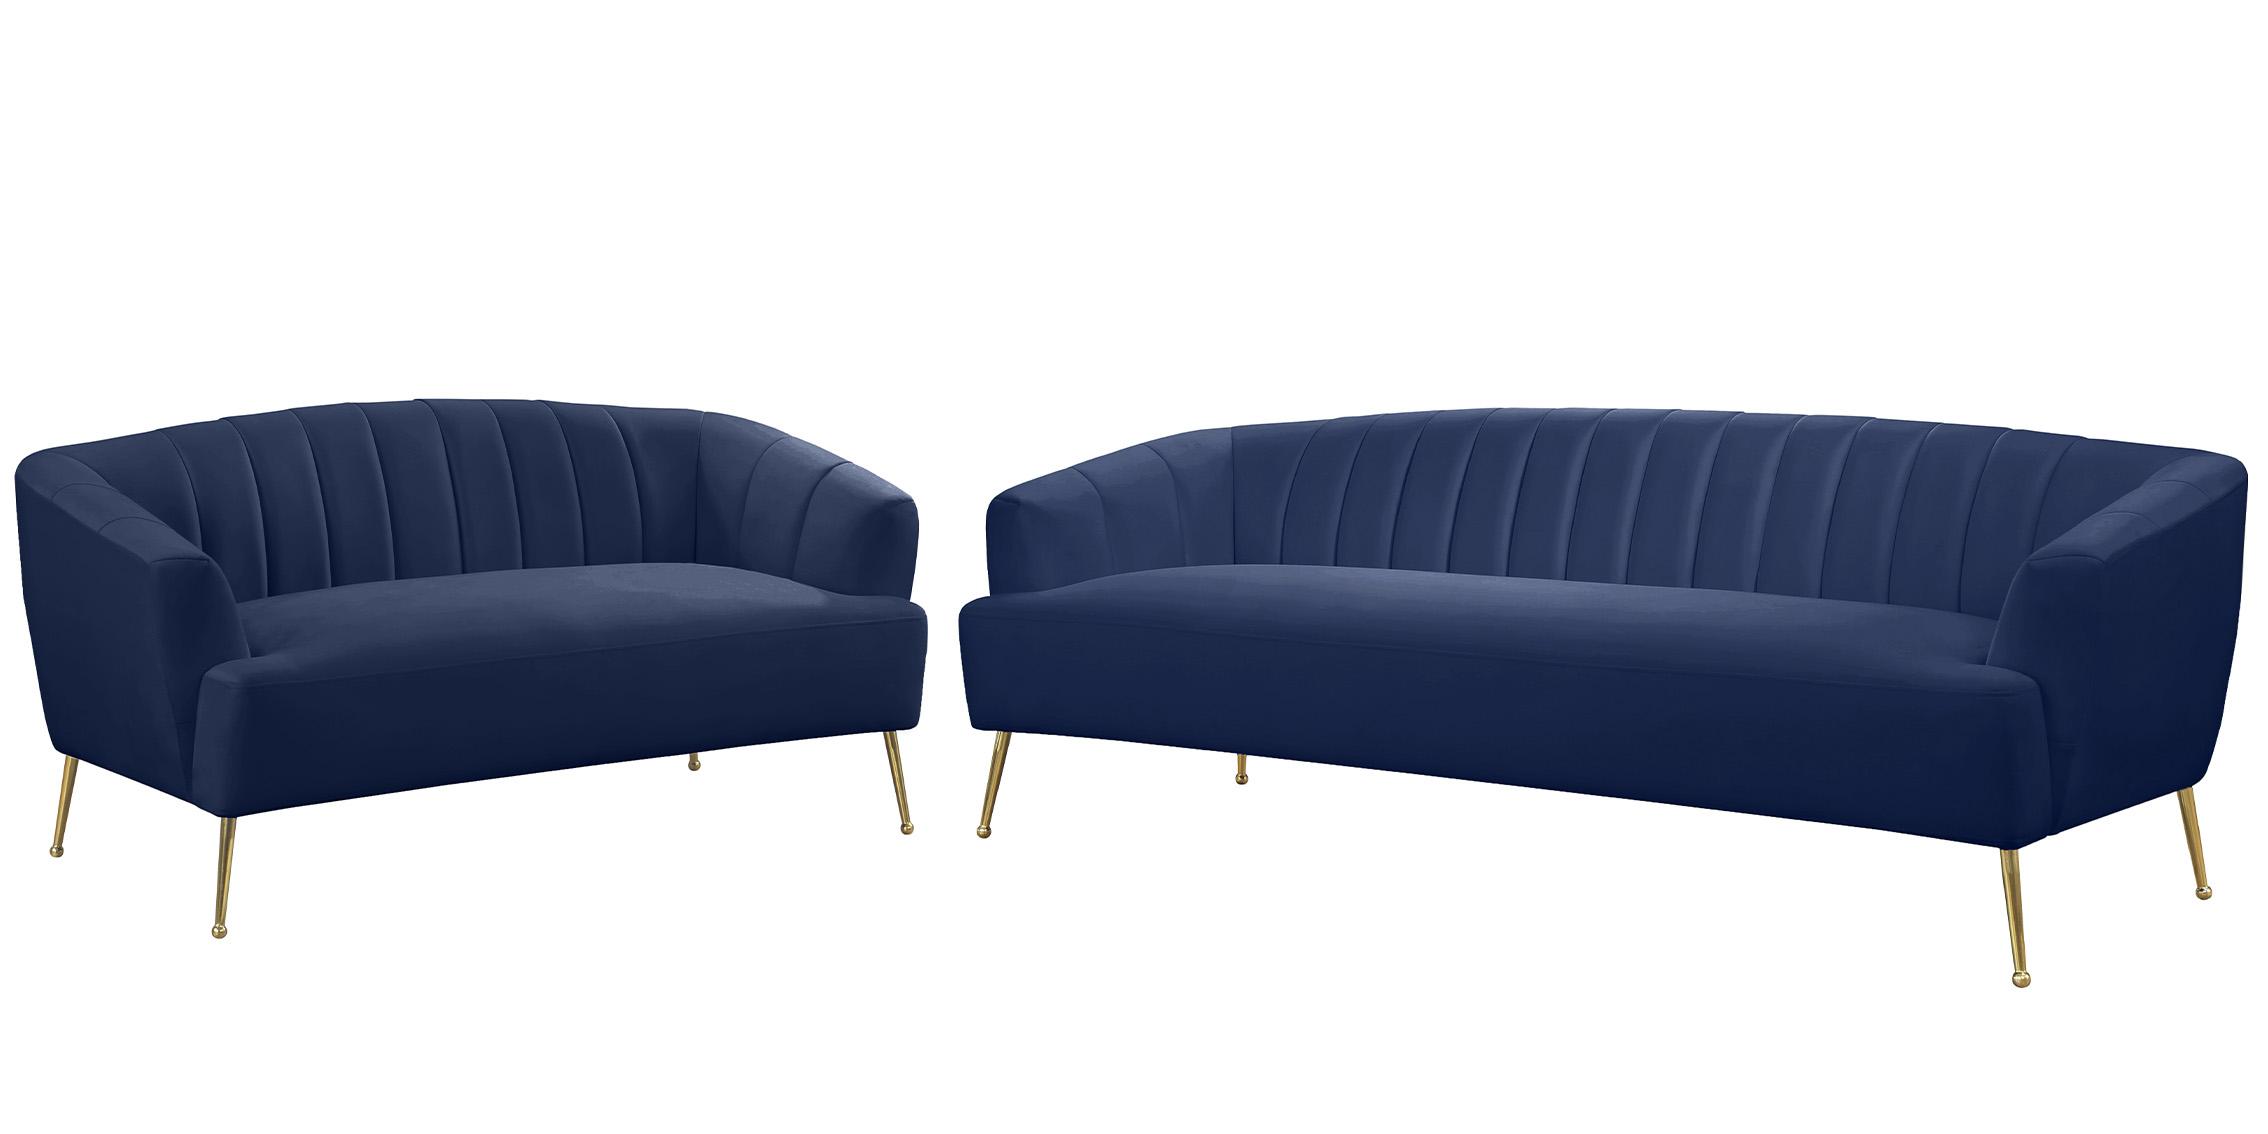 Contemporary, Modern Sofa Set TORI 657Navy 657Navy-S-Set-2 in Navy blue Velvet